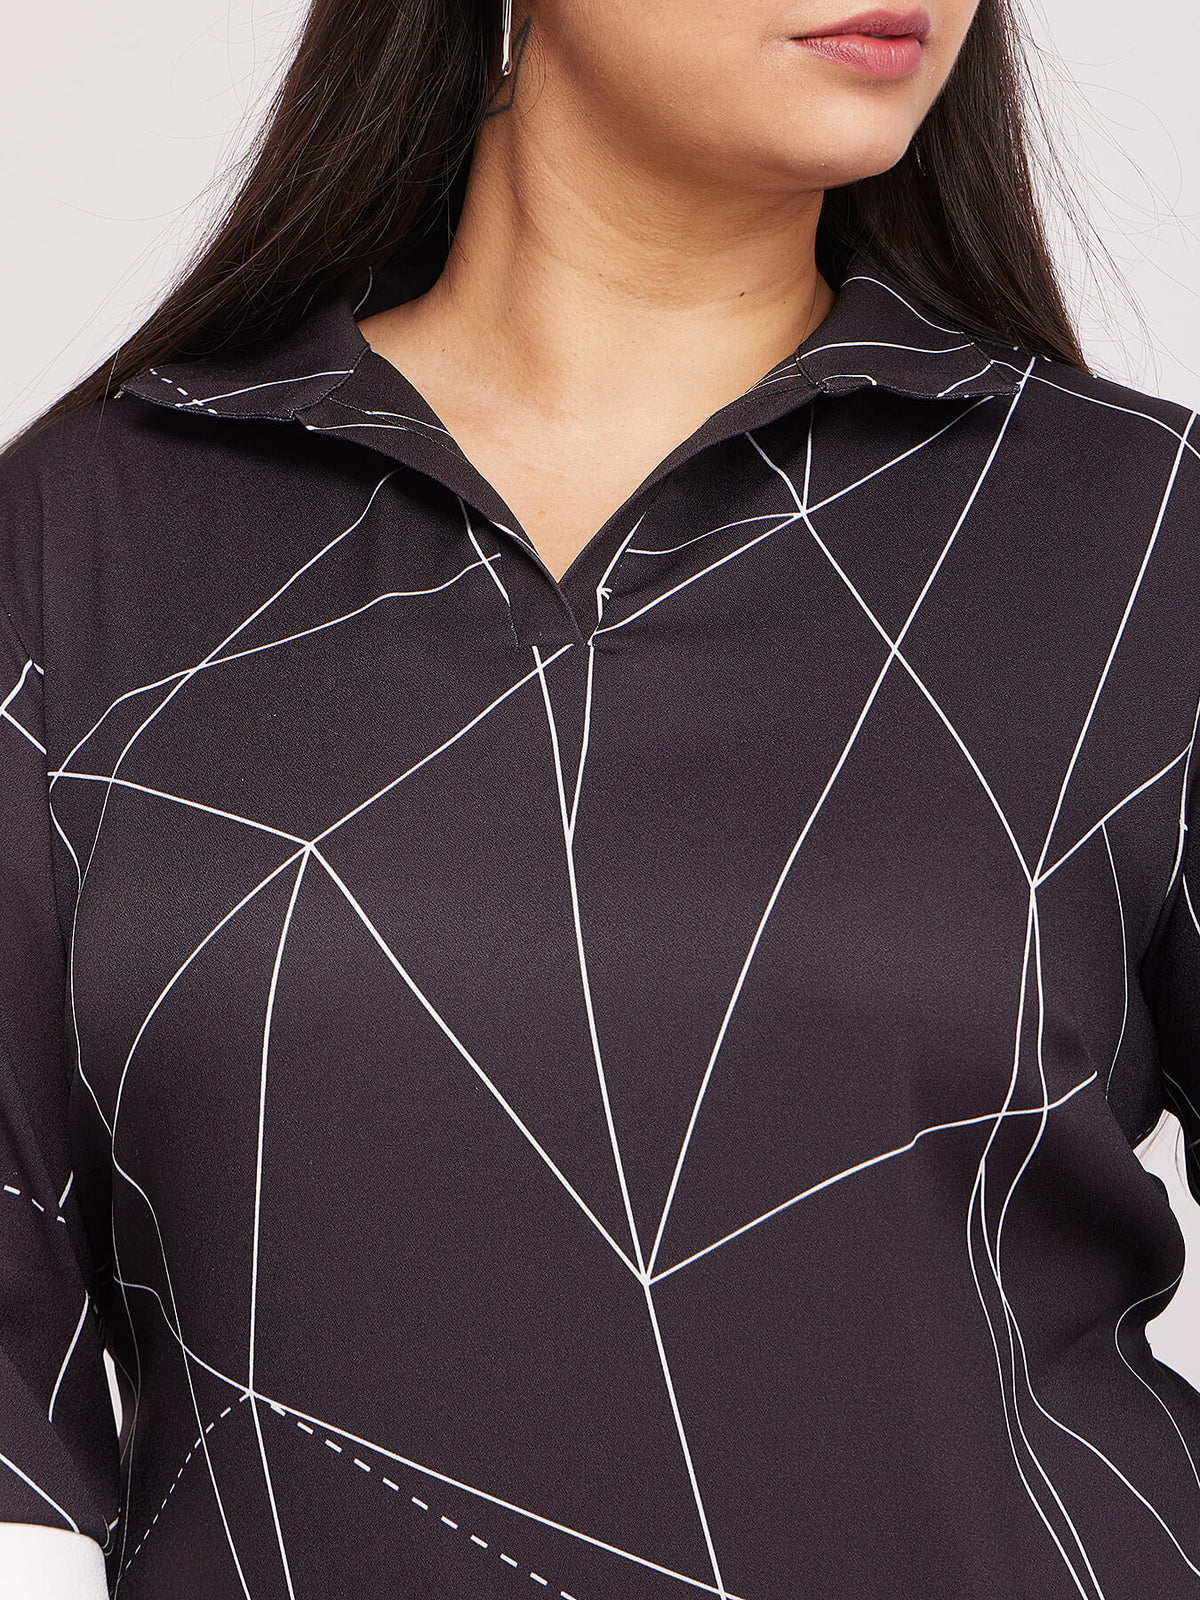 Geometric Print Shift Dress - Black And White